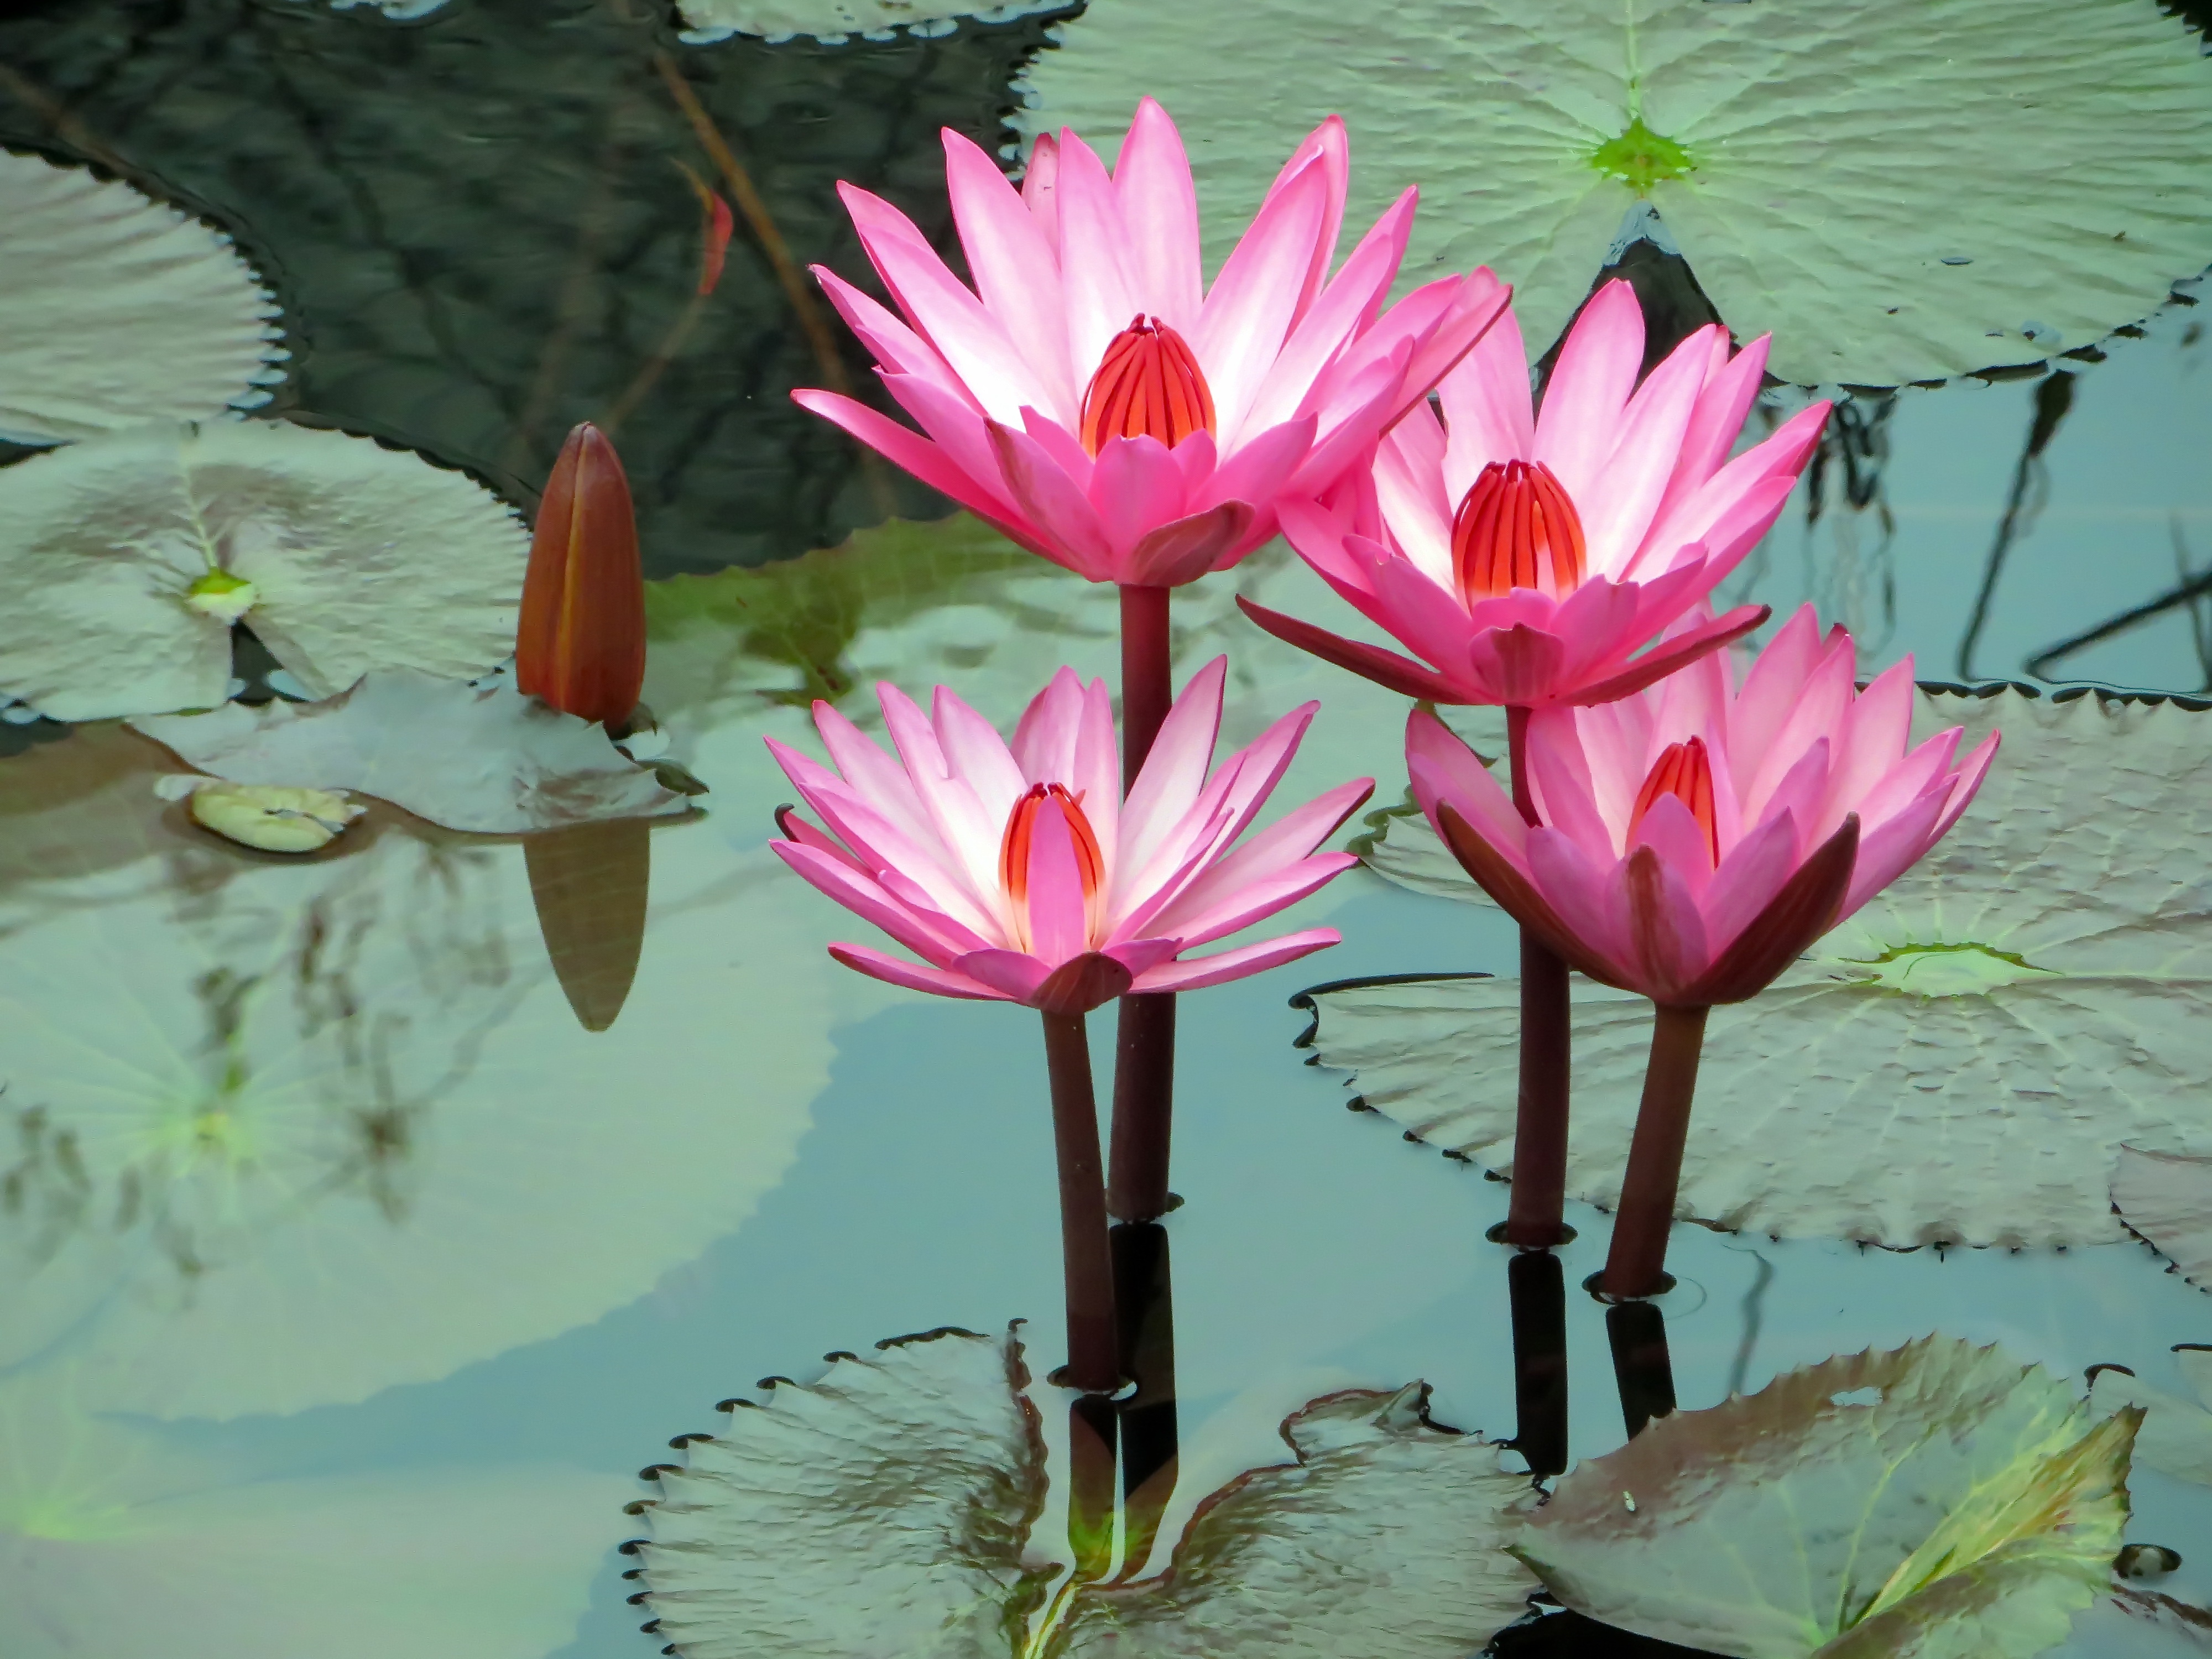 Popular Lotus Image for Phone